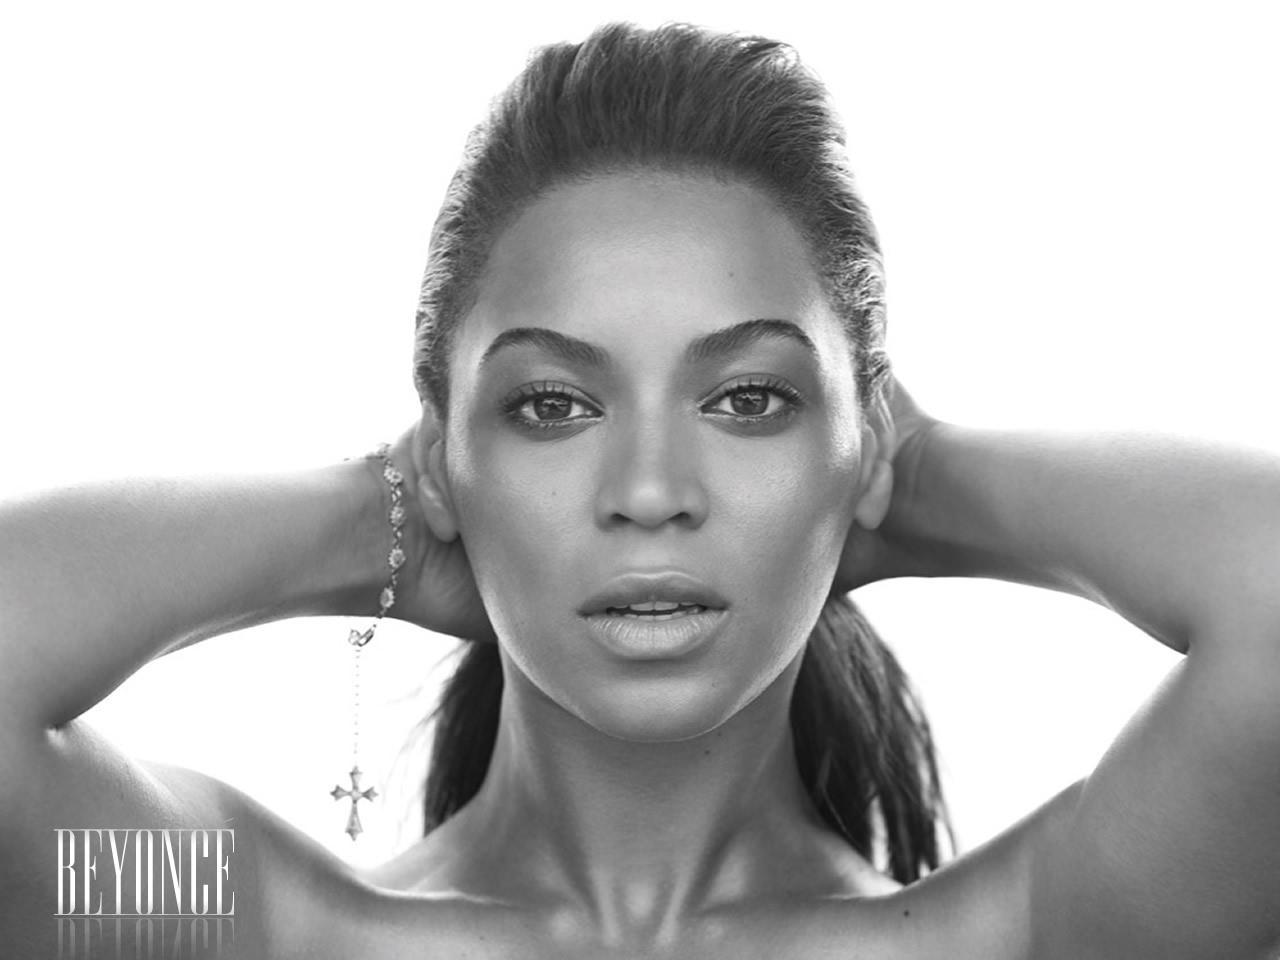 Free Download Beyonce Wallpaper Free 2014 (3144) Full Size